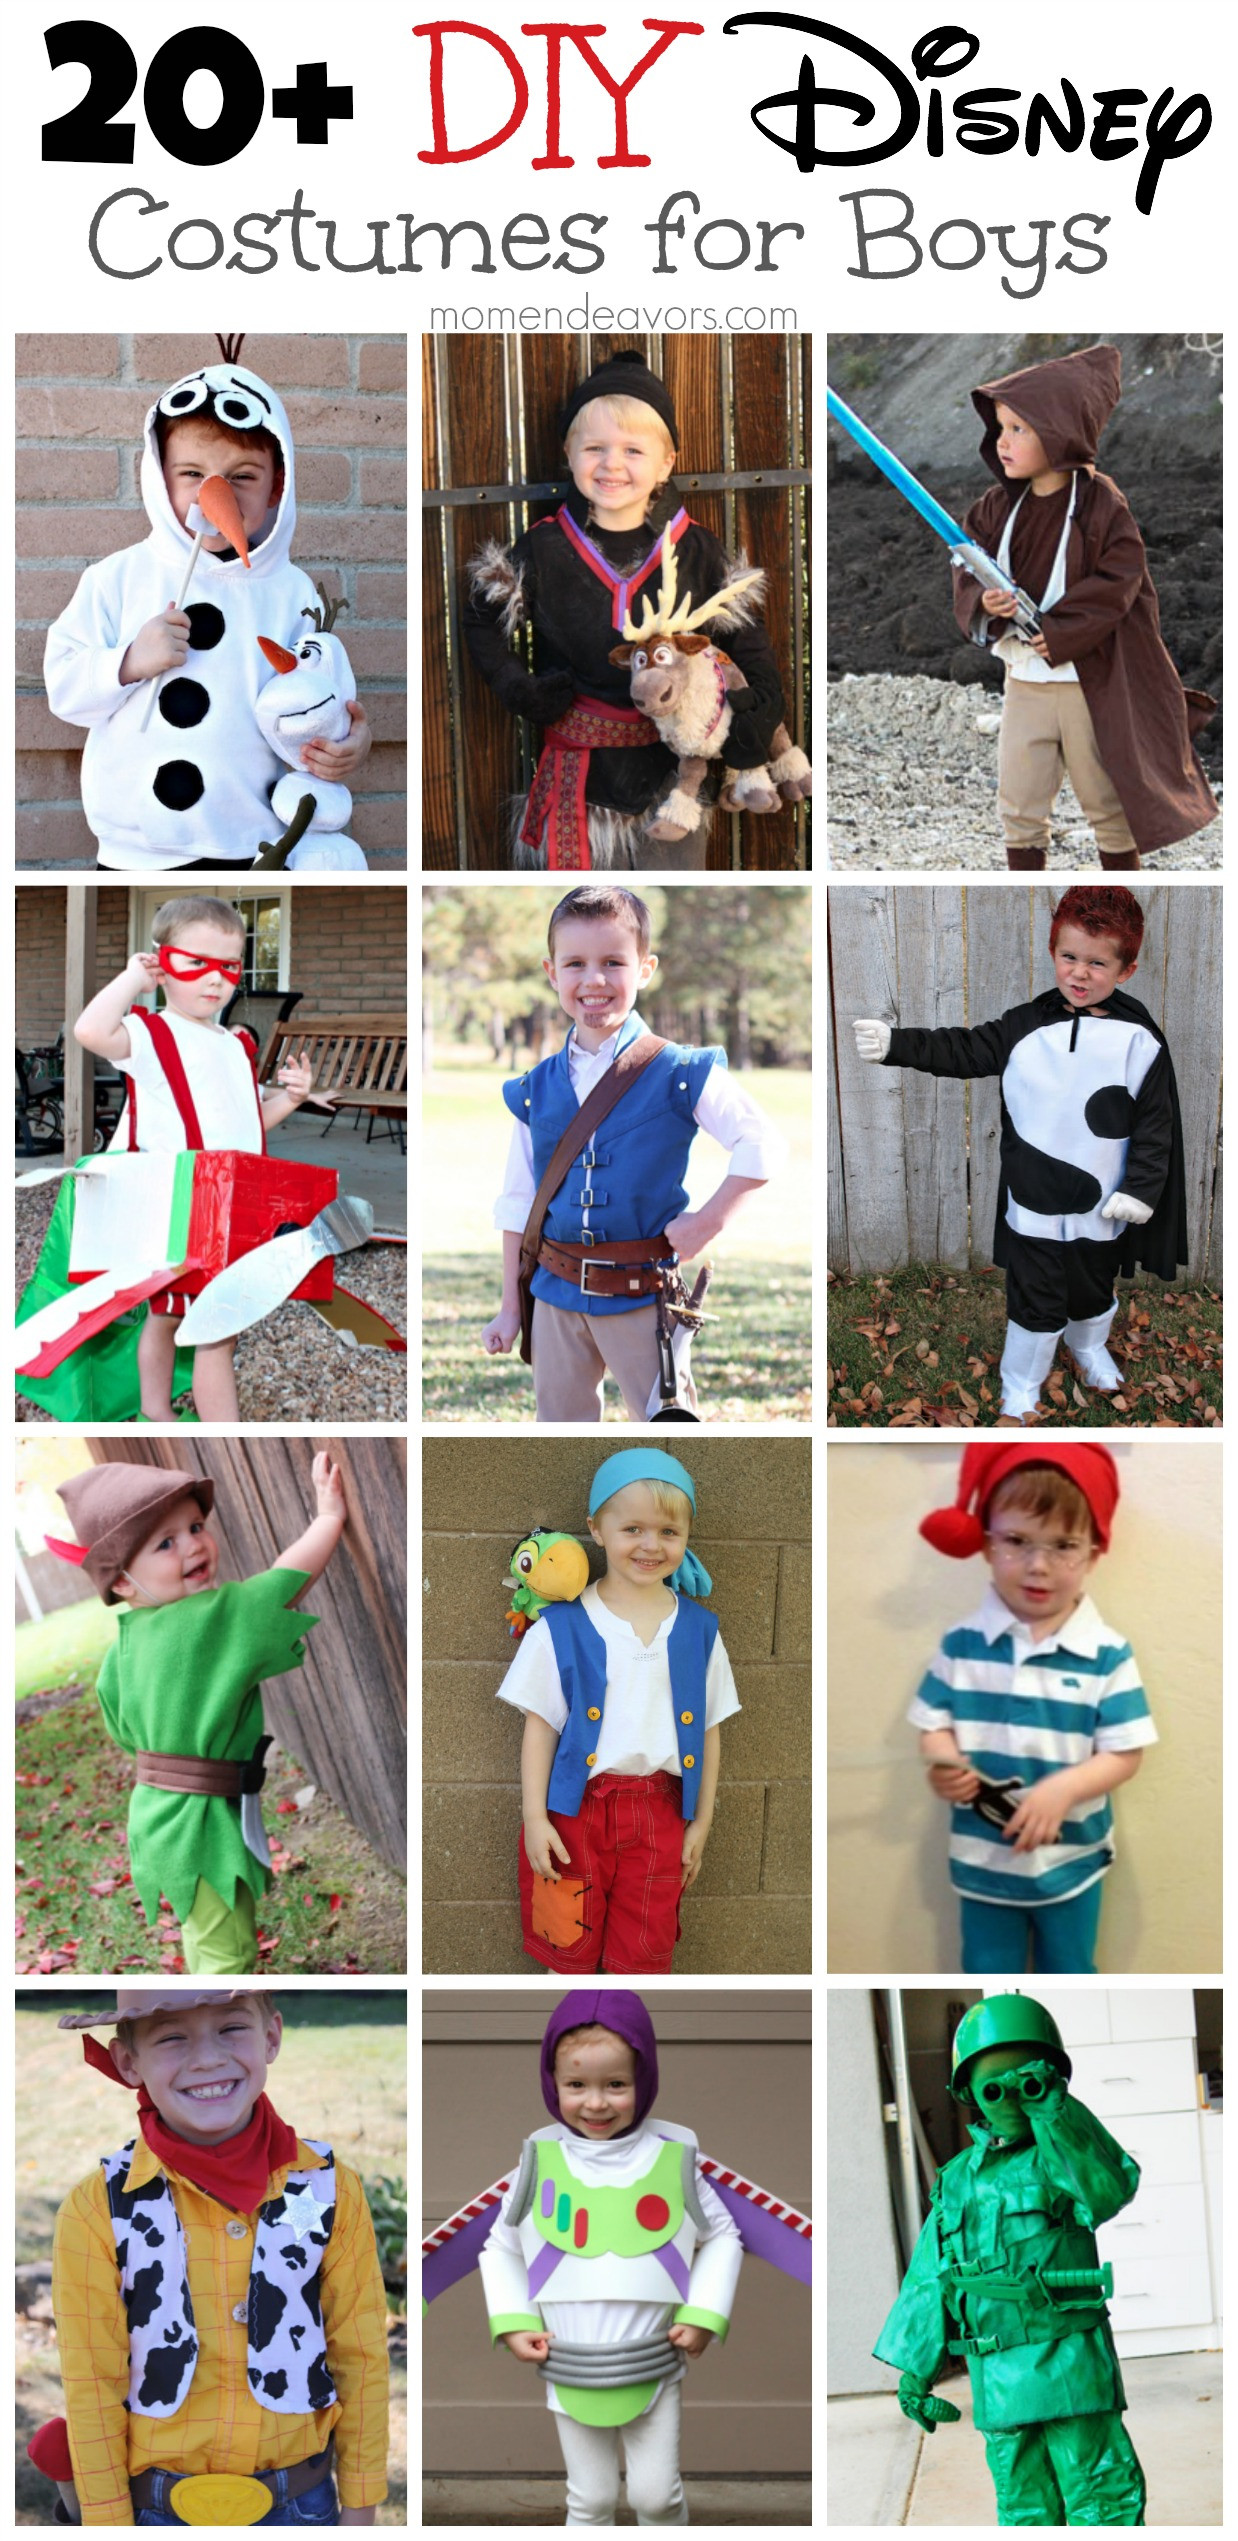 Disney Villain Costumes DIY
 DIY Disney Costumes for Boys